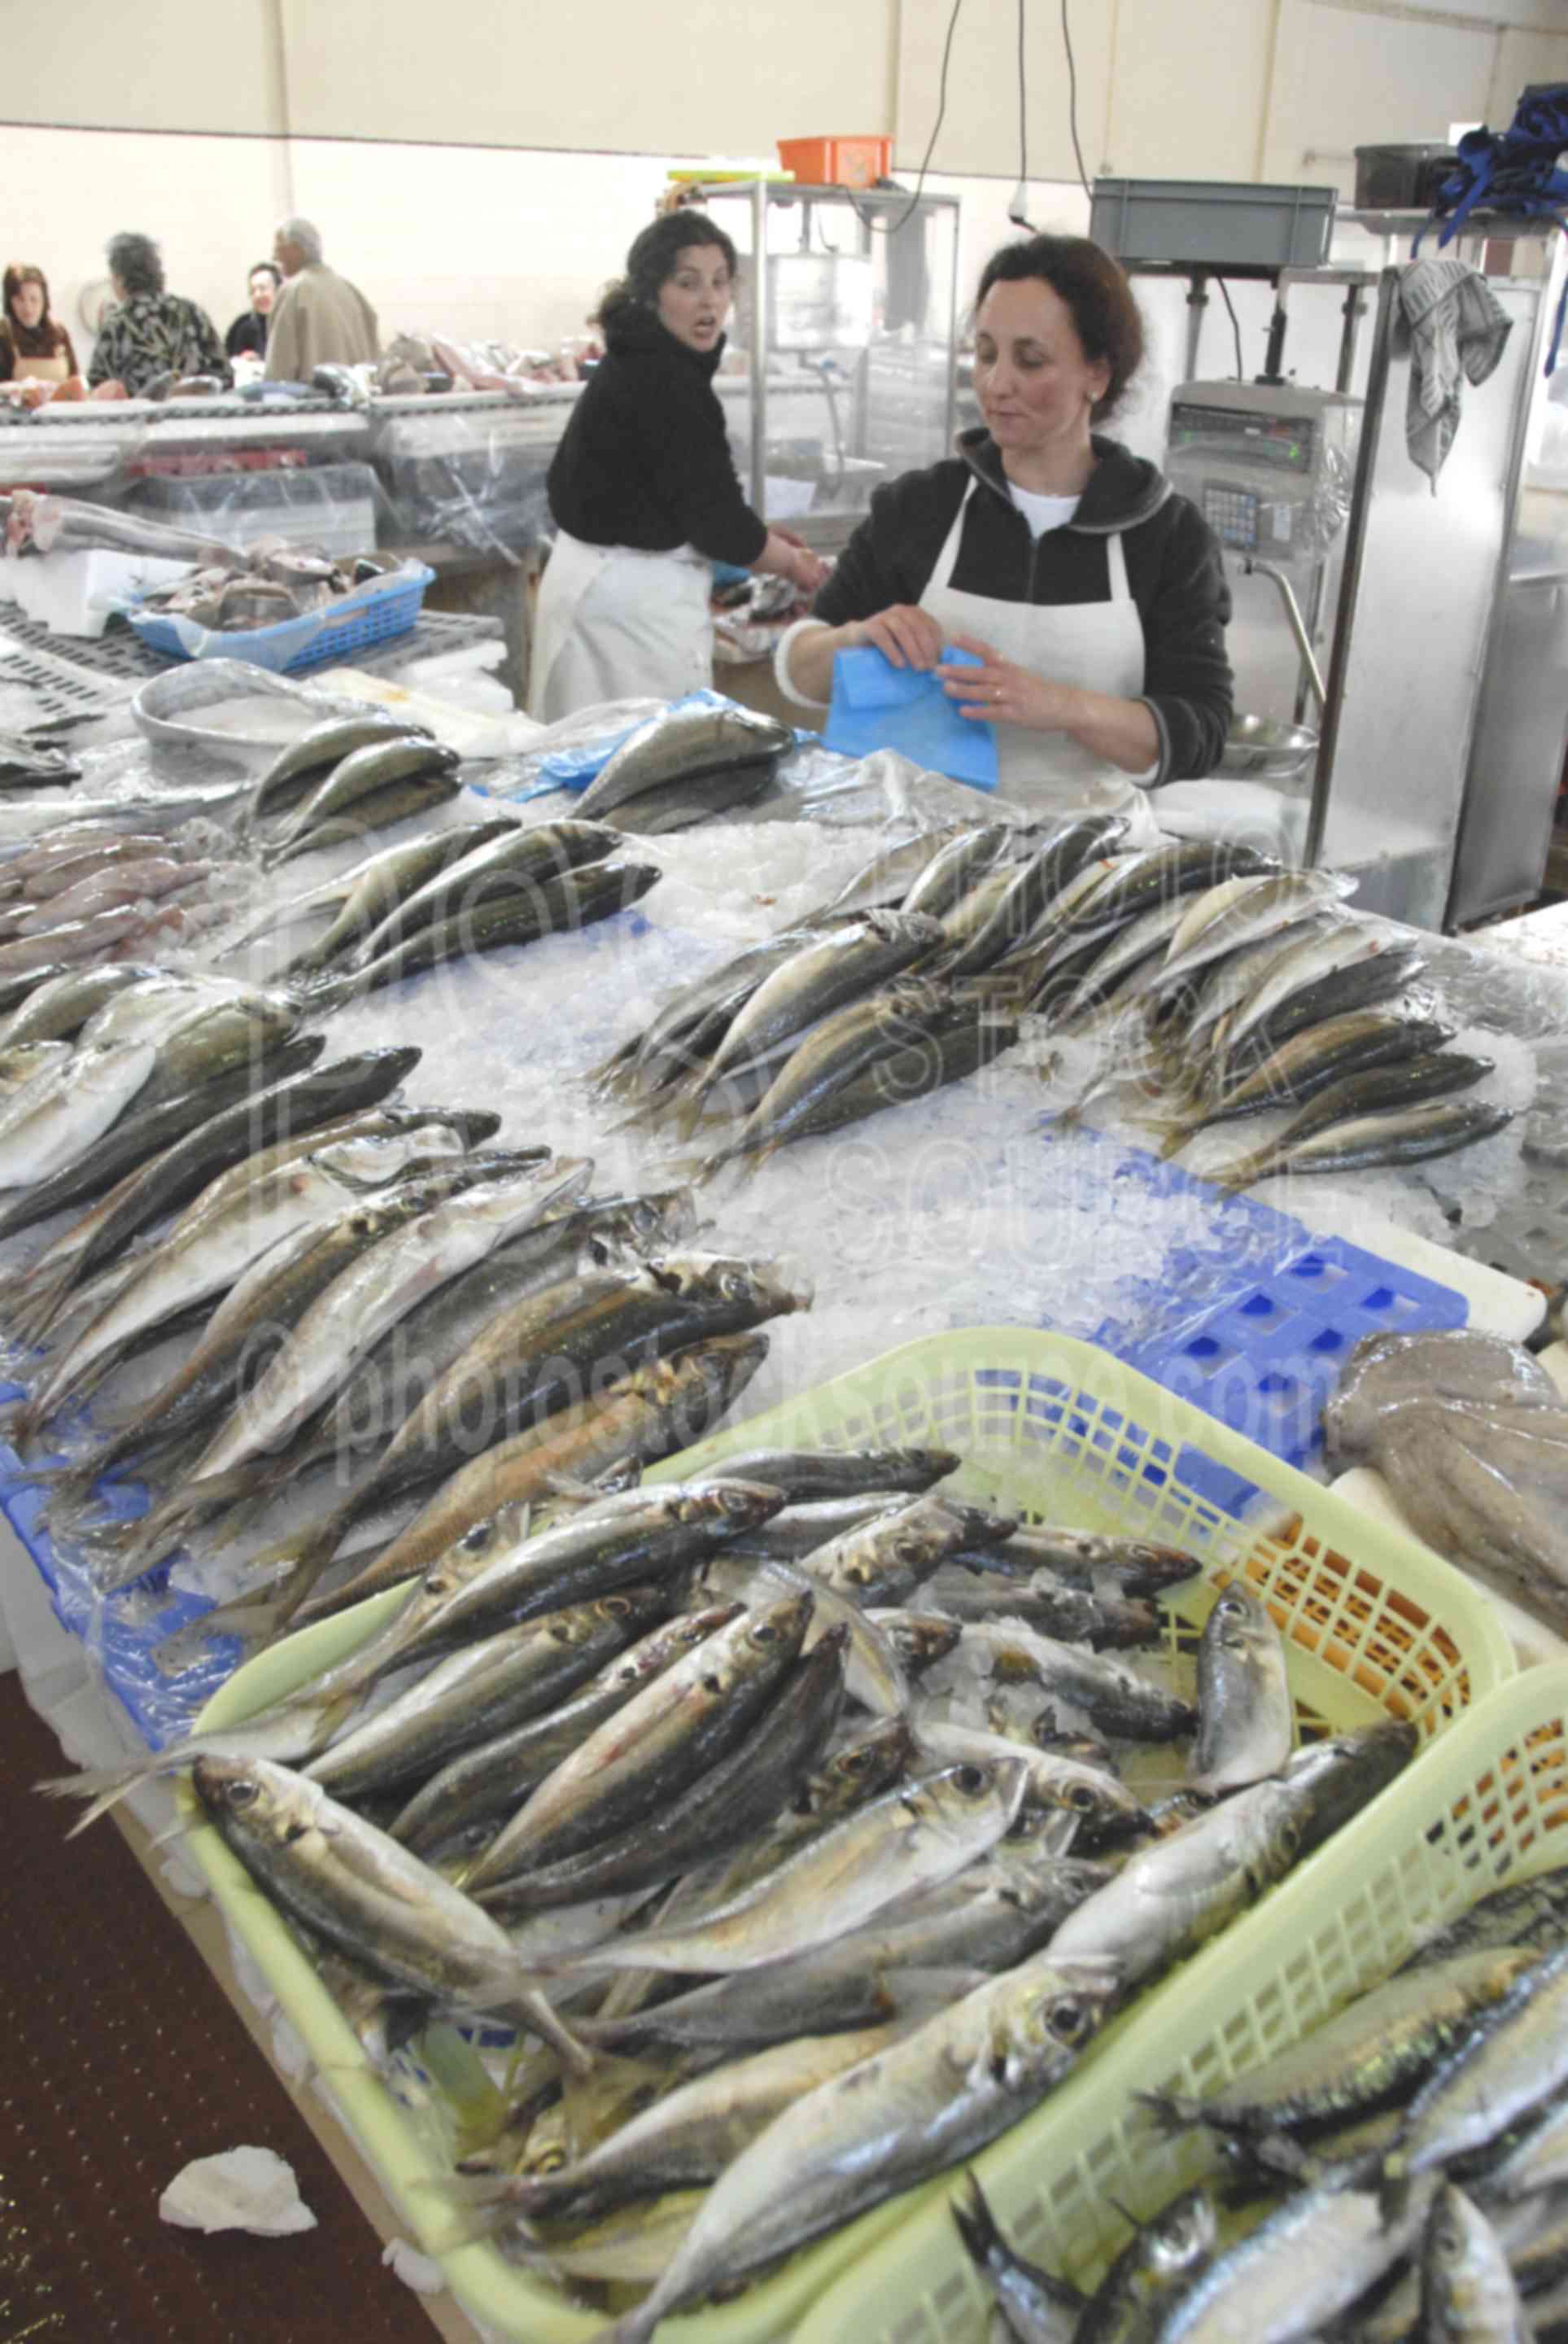 Fish Market,food,seller,vendor,mercado do peixe,woman,fish,fishmonger,markets